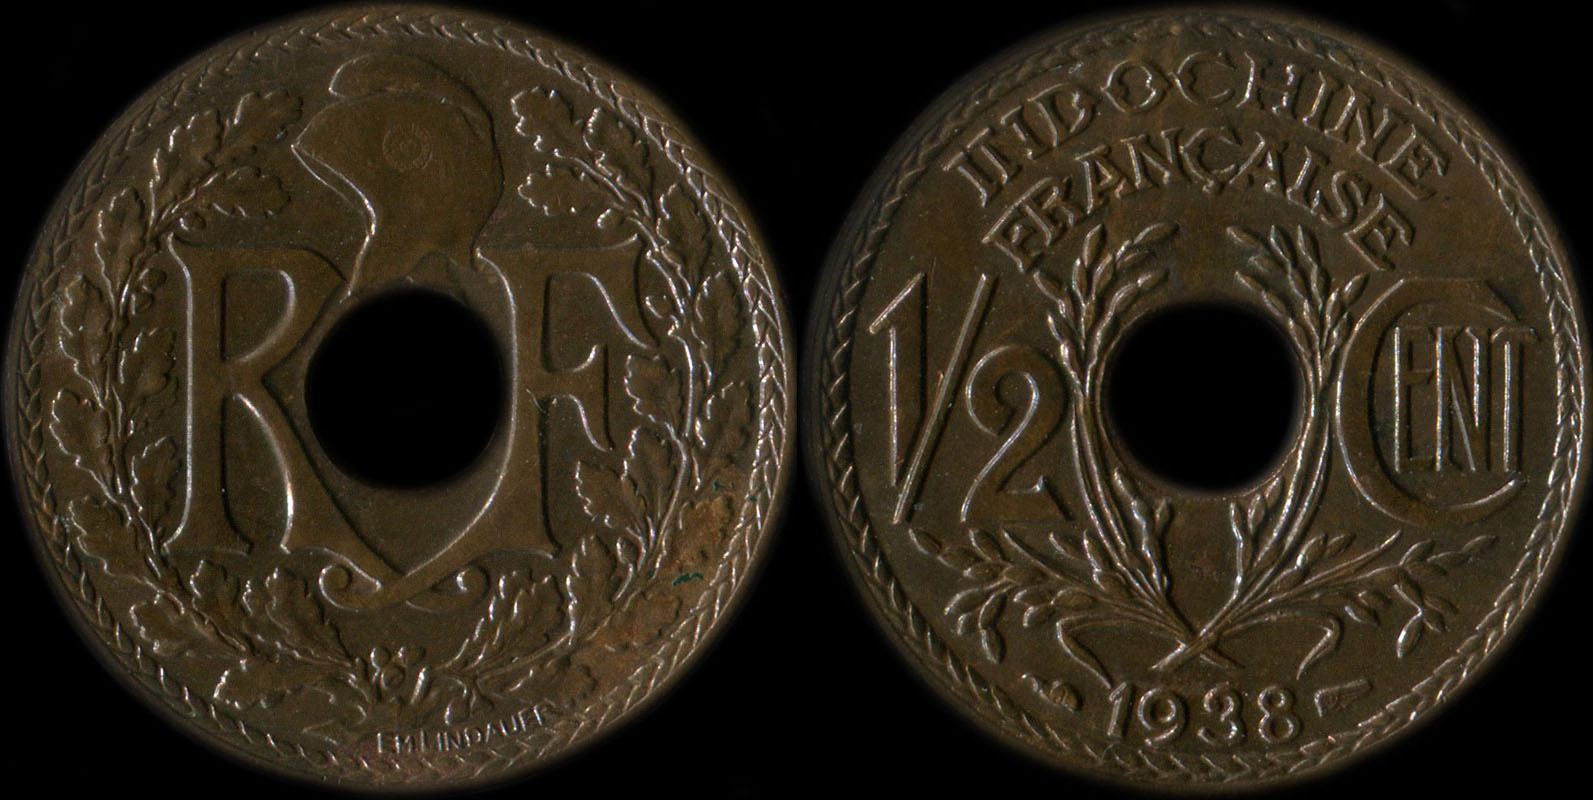 Pièce de 1/2 centième Indochine 1938